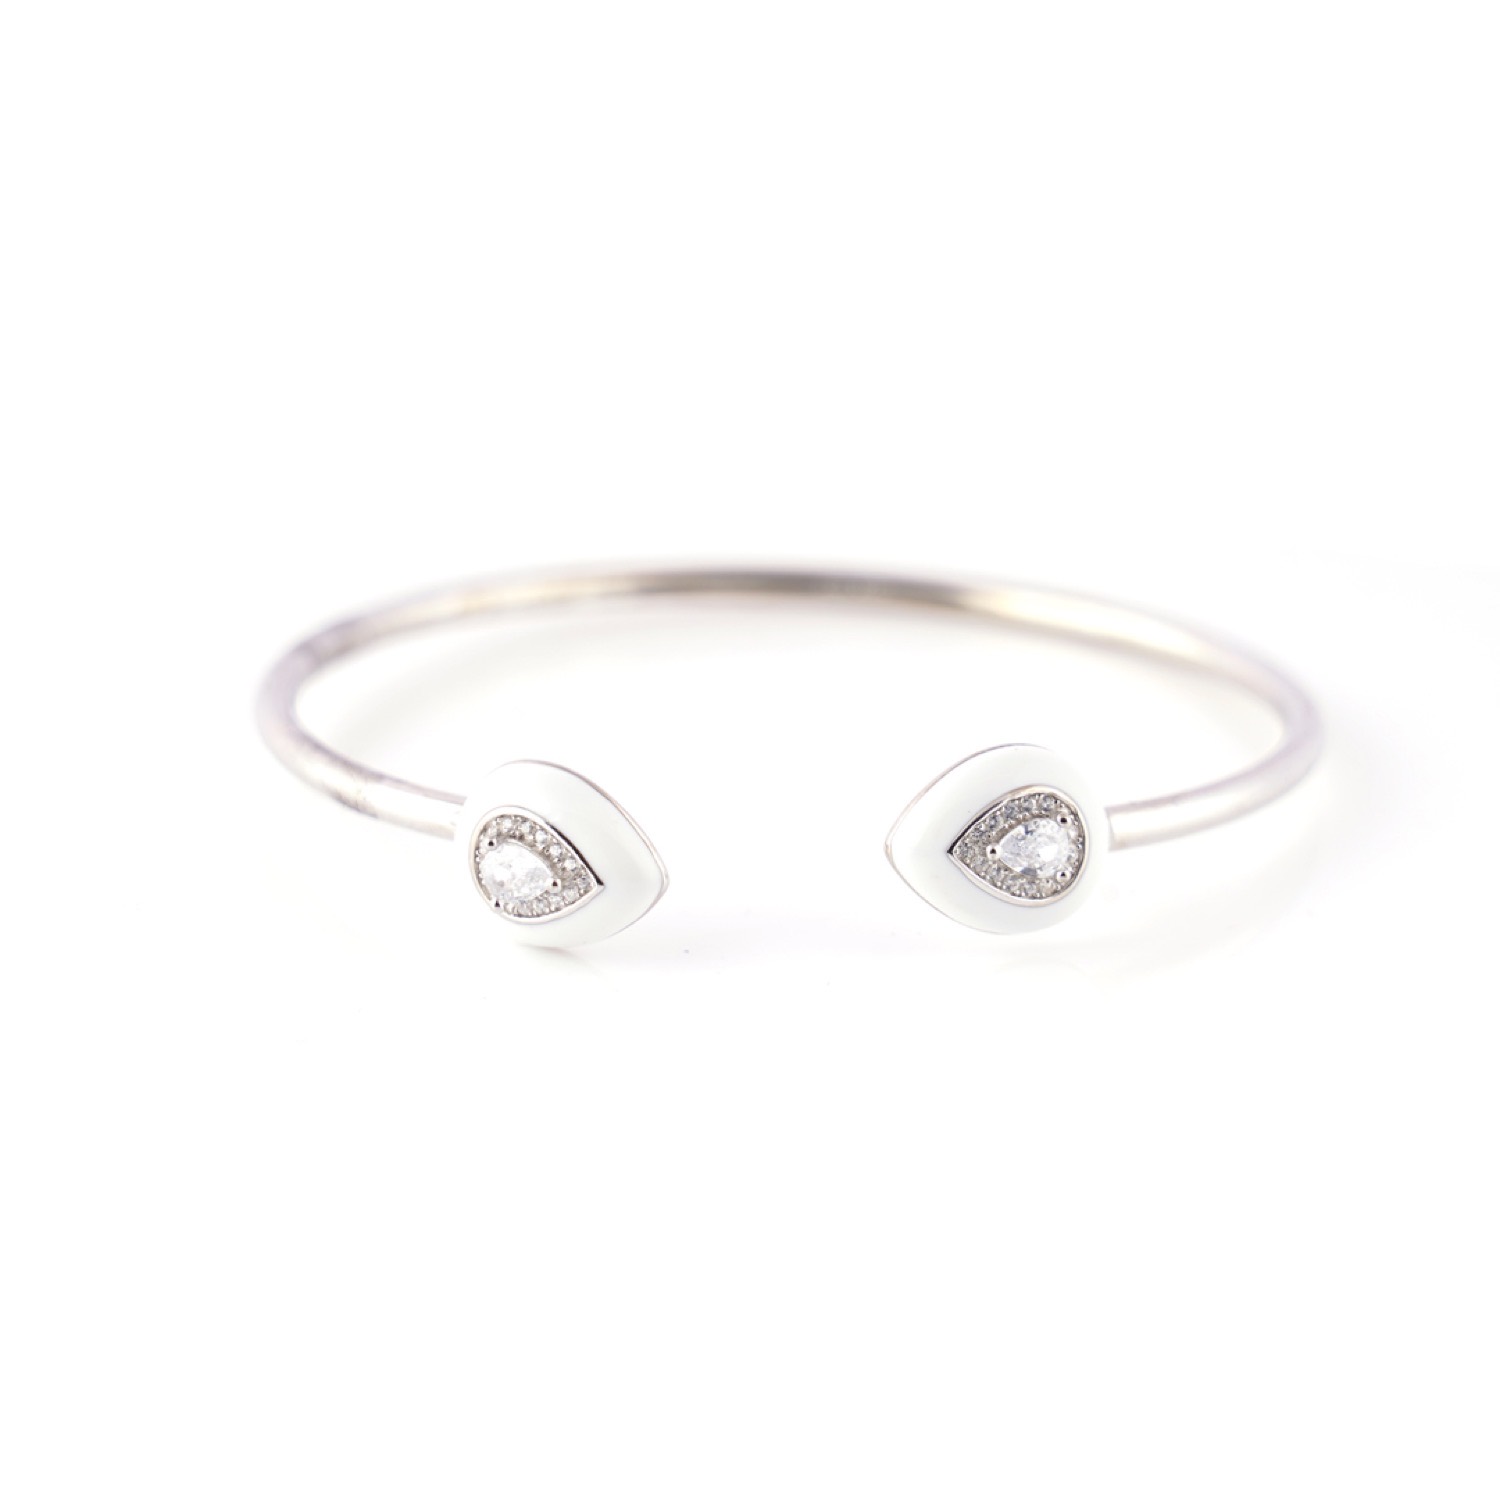 varam_bracelet_and_bangle_pear_shaped_design_white_enameled_open_cuff_silver_bracelet-1